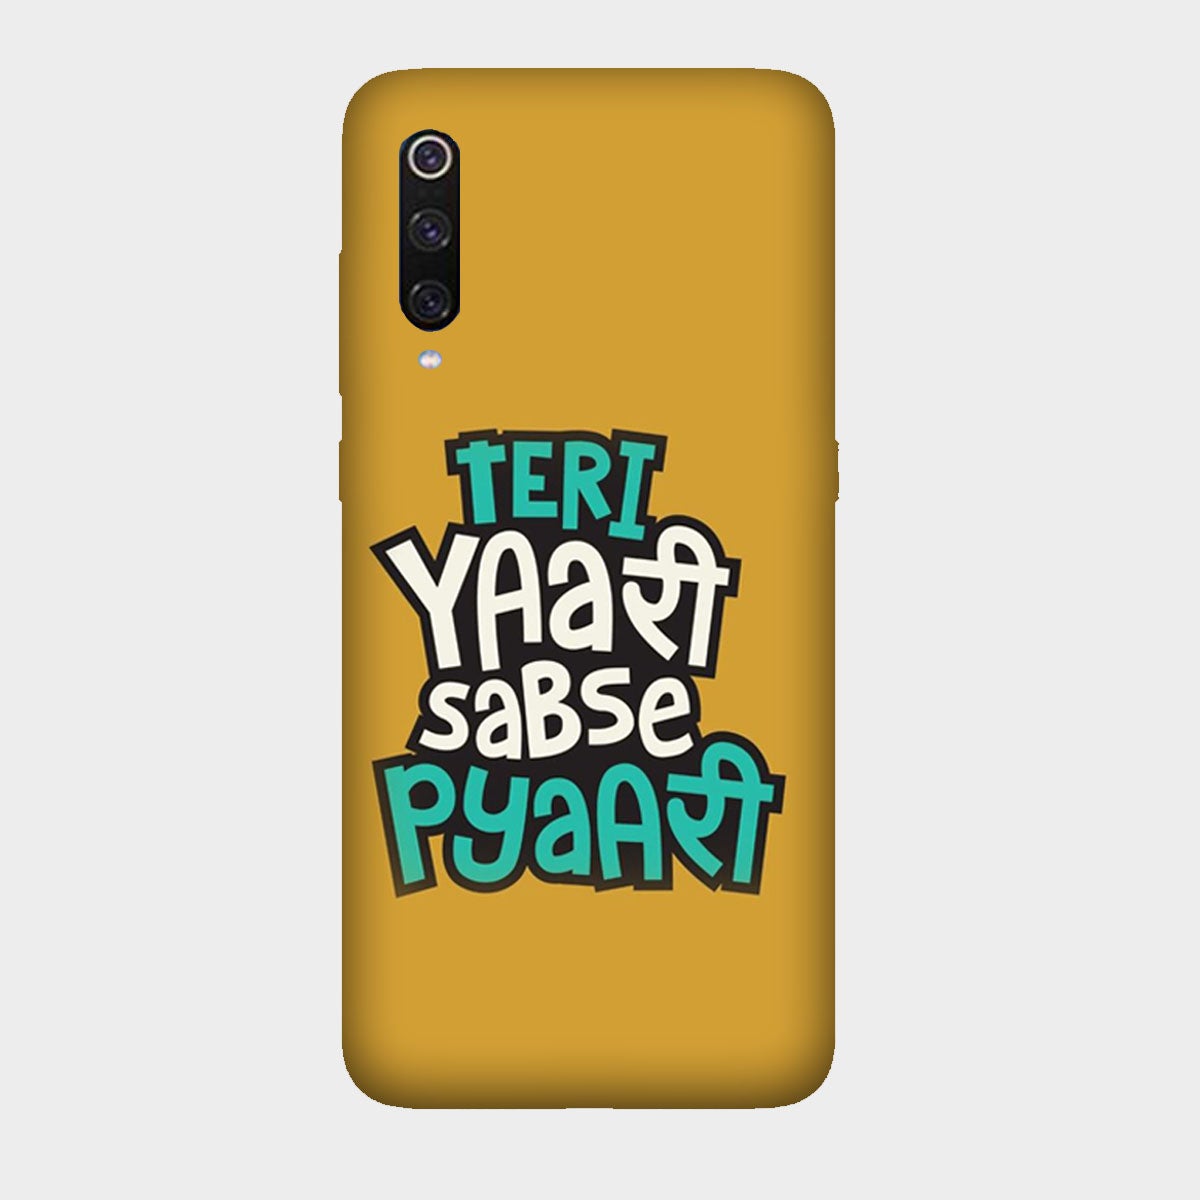 Teri Yaari Sabse Pyaari - Mobile Phone Cover - Hard Case